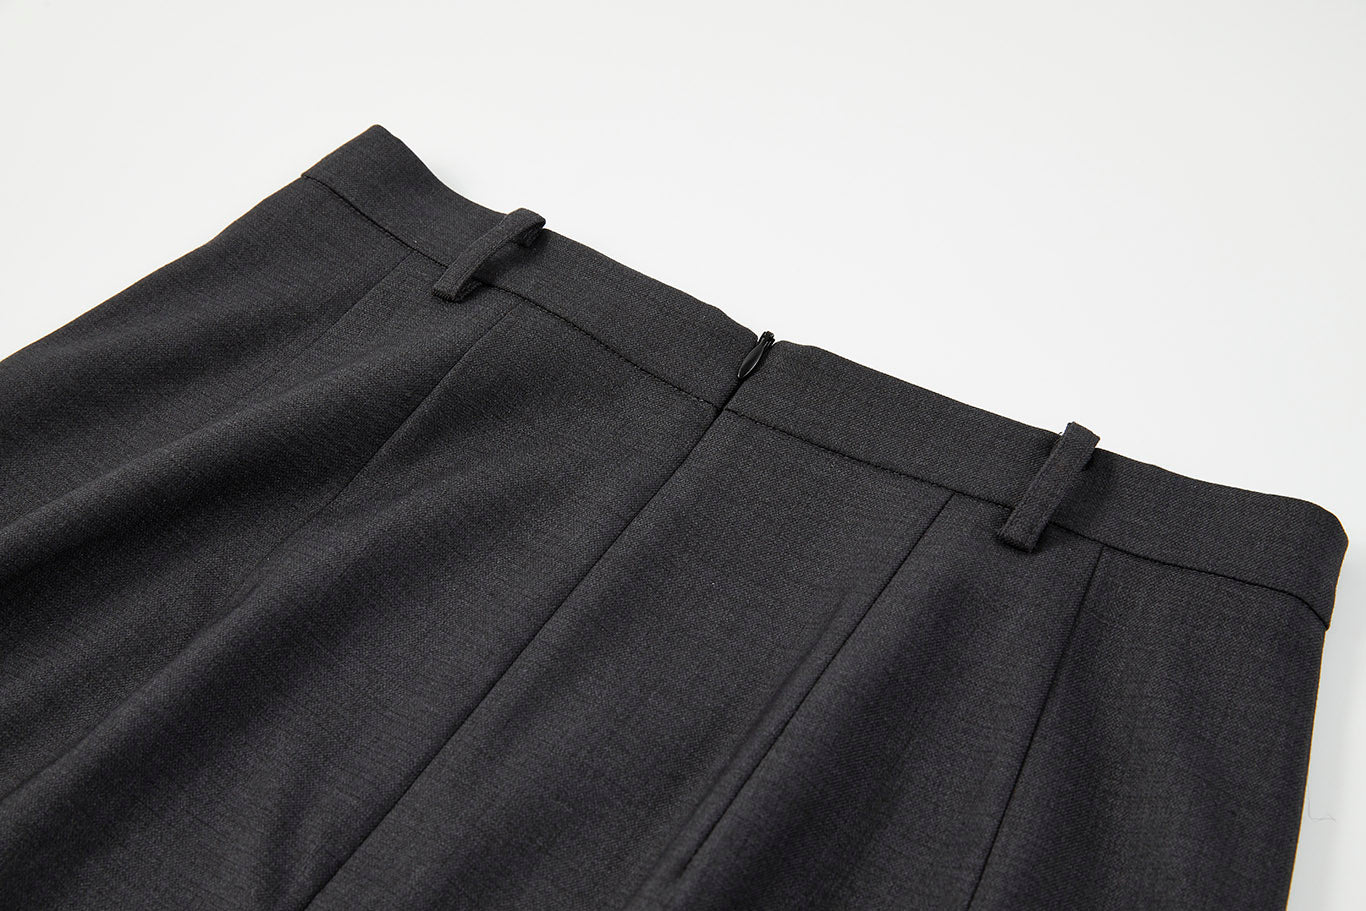 [tageechita] Back slit maxi tight skirt